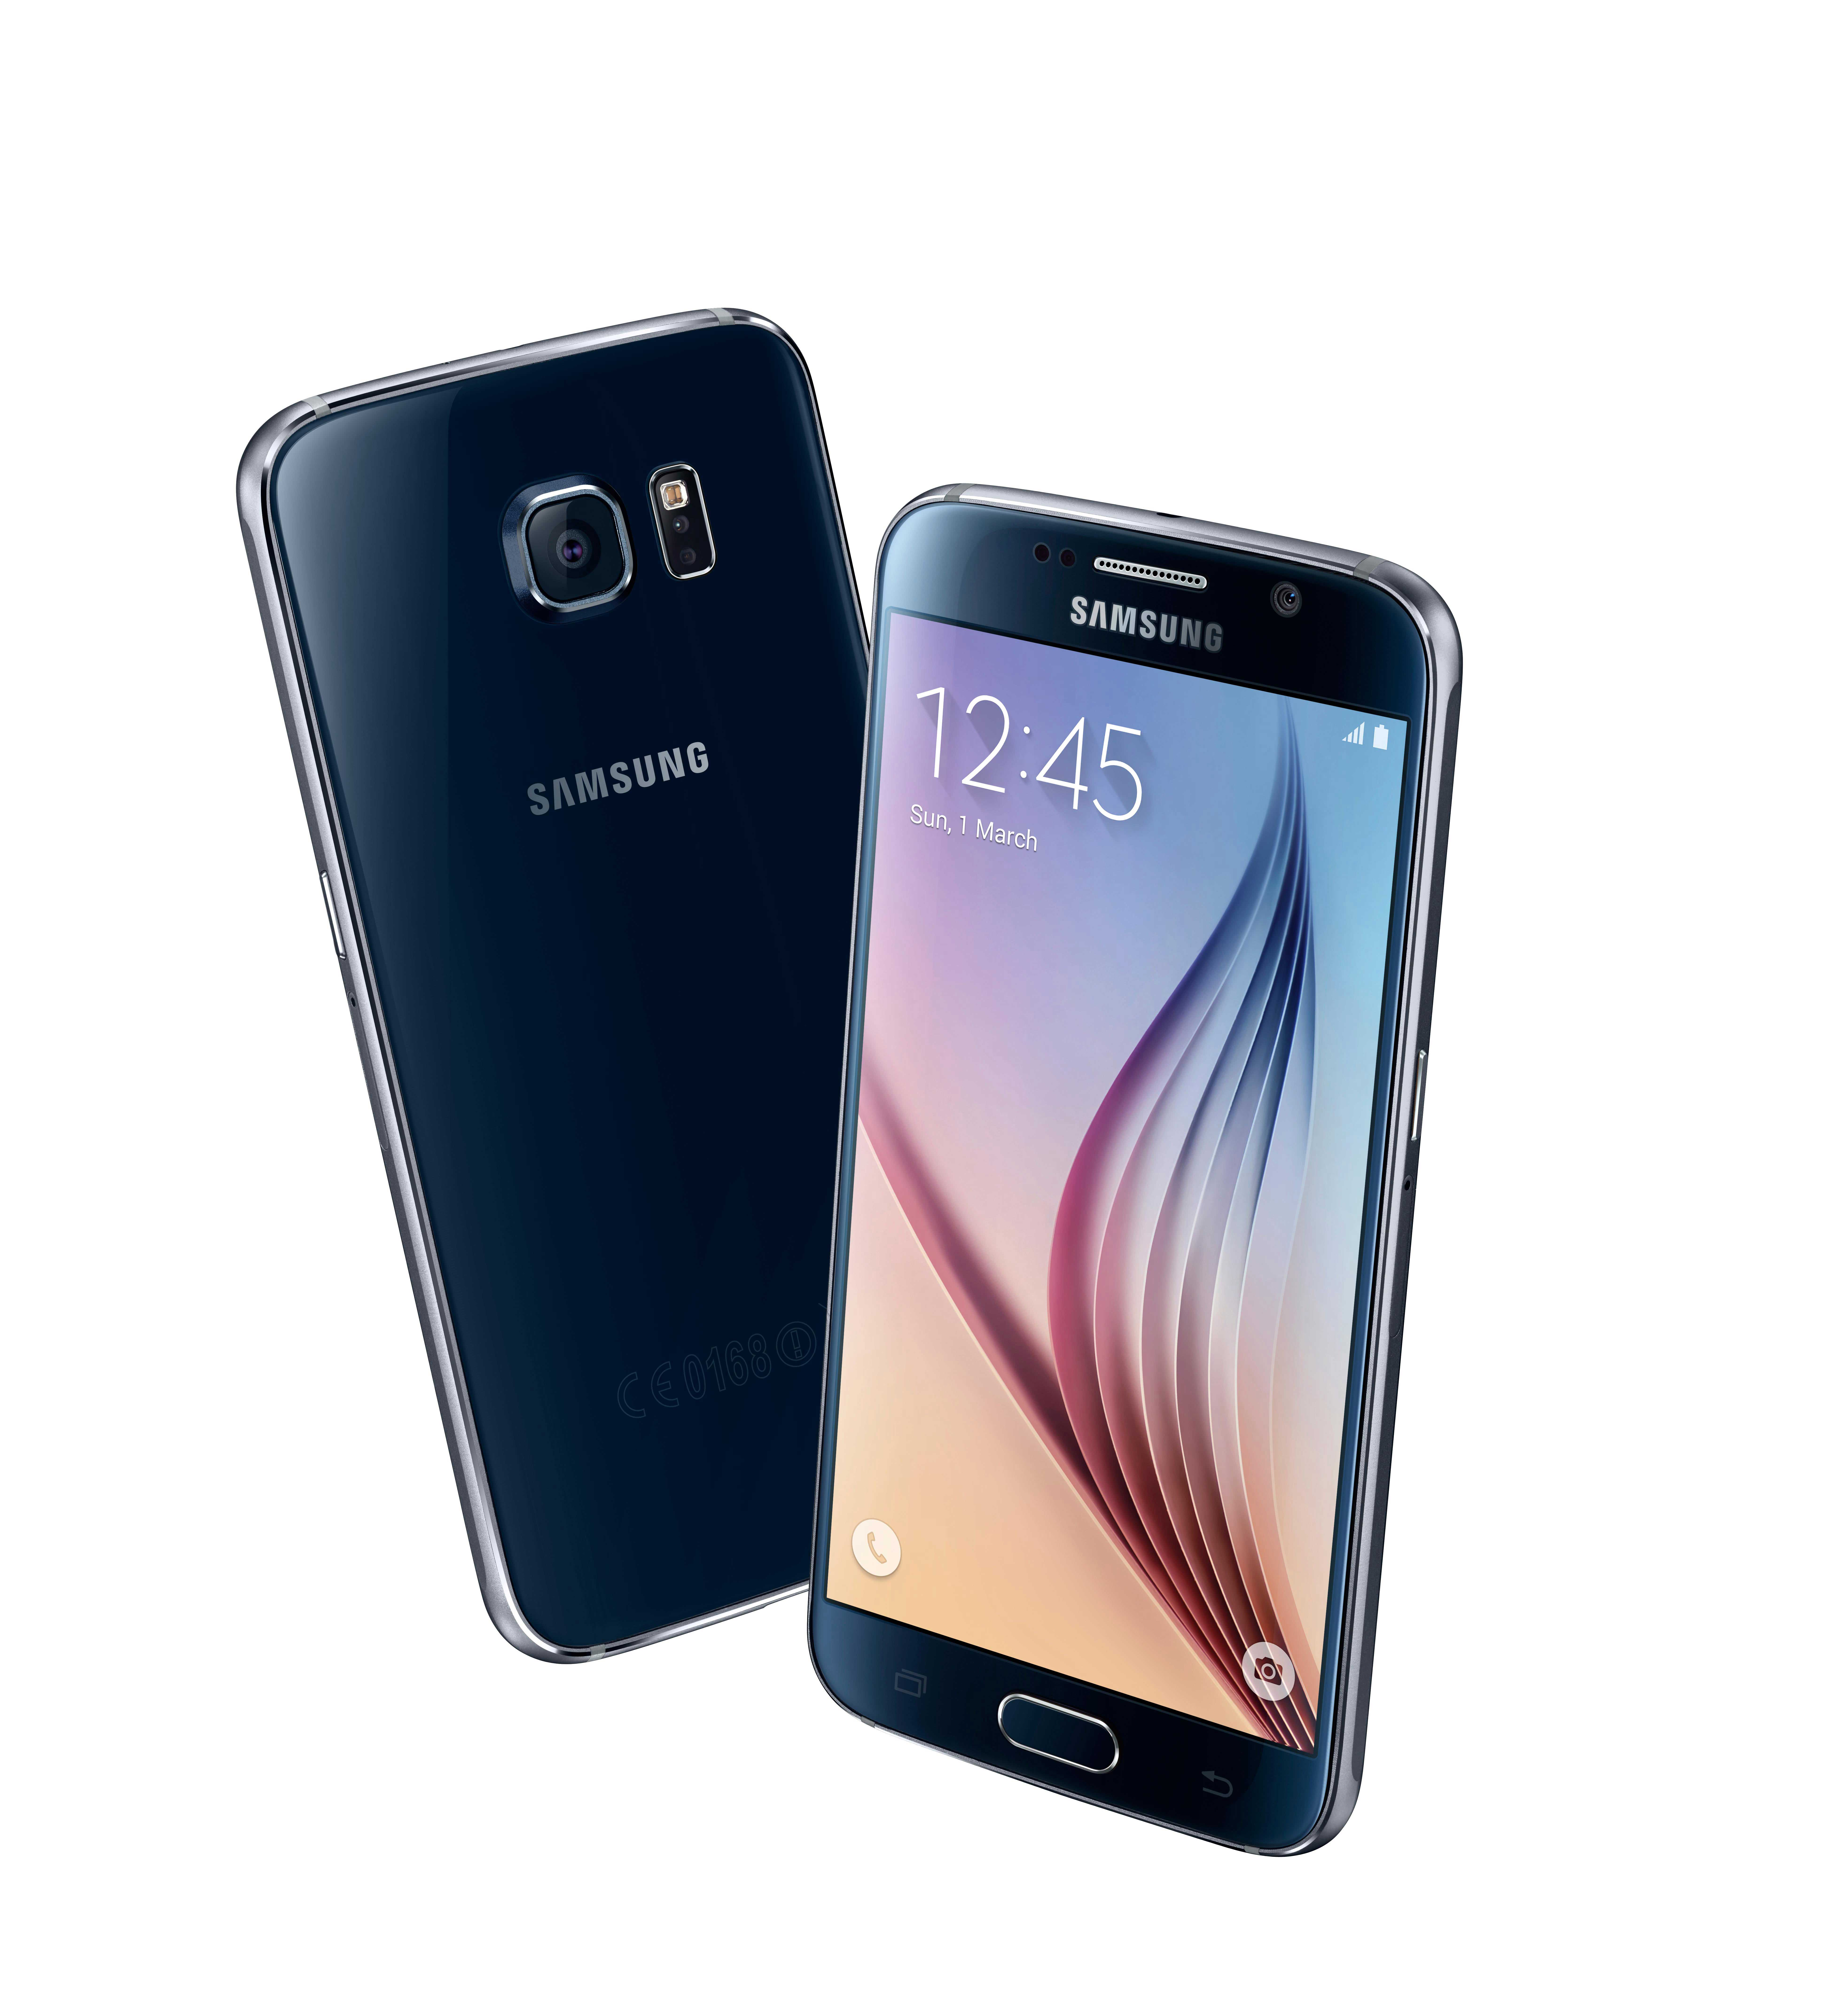 Samsung Galaxy S6 Smartphone Review Notebookchecknet Reviews